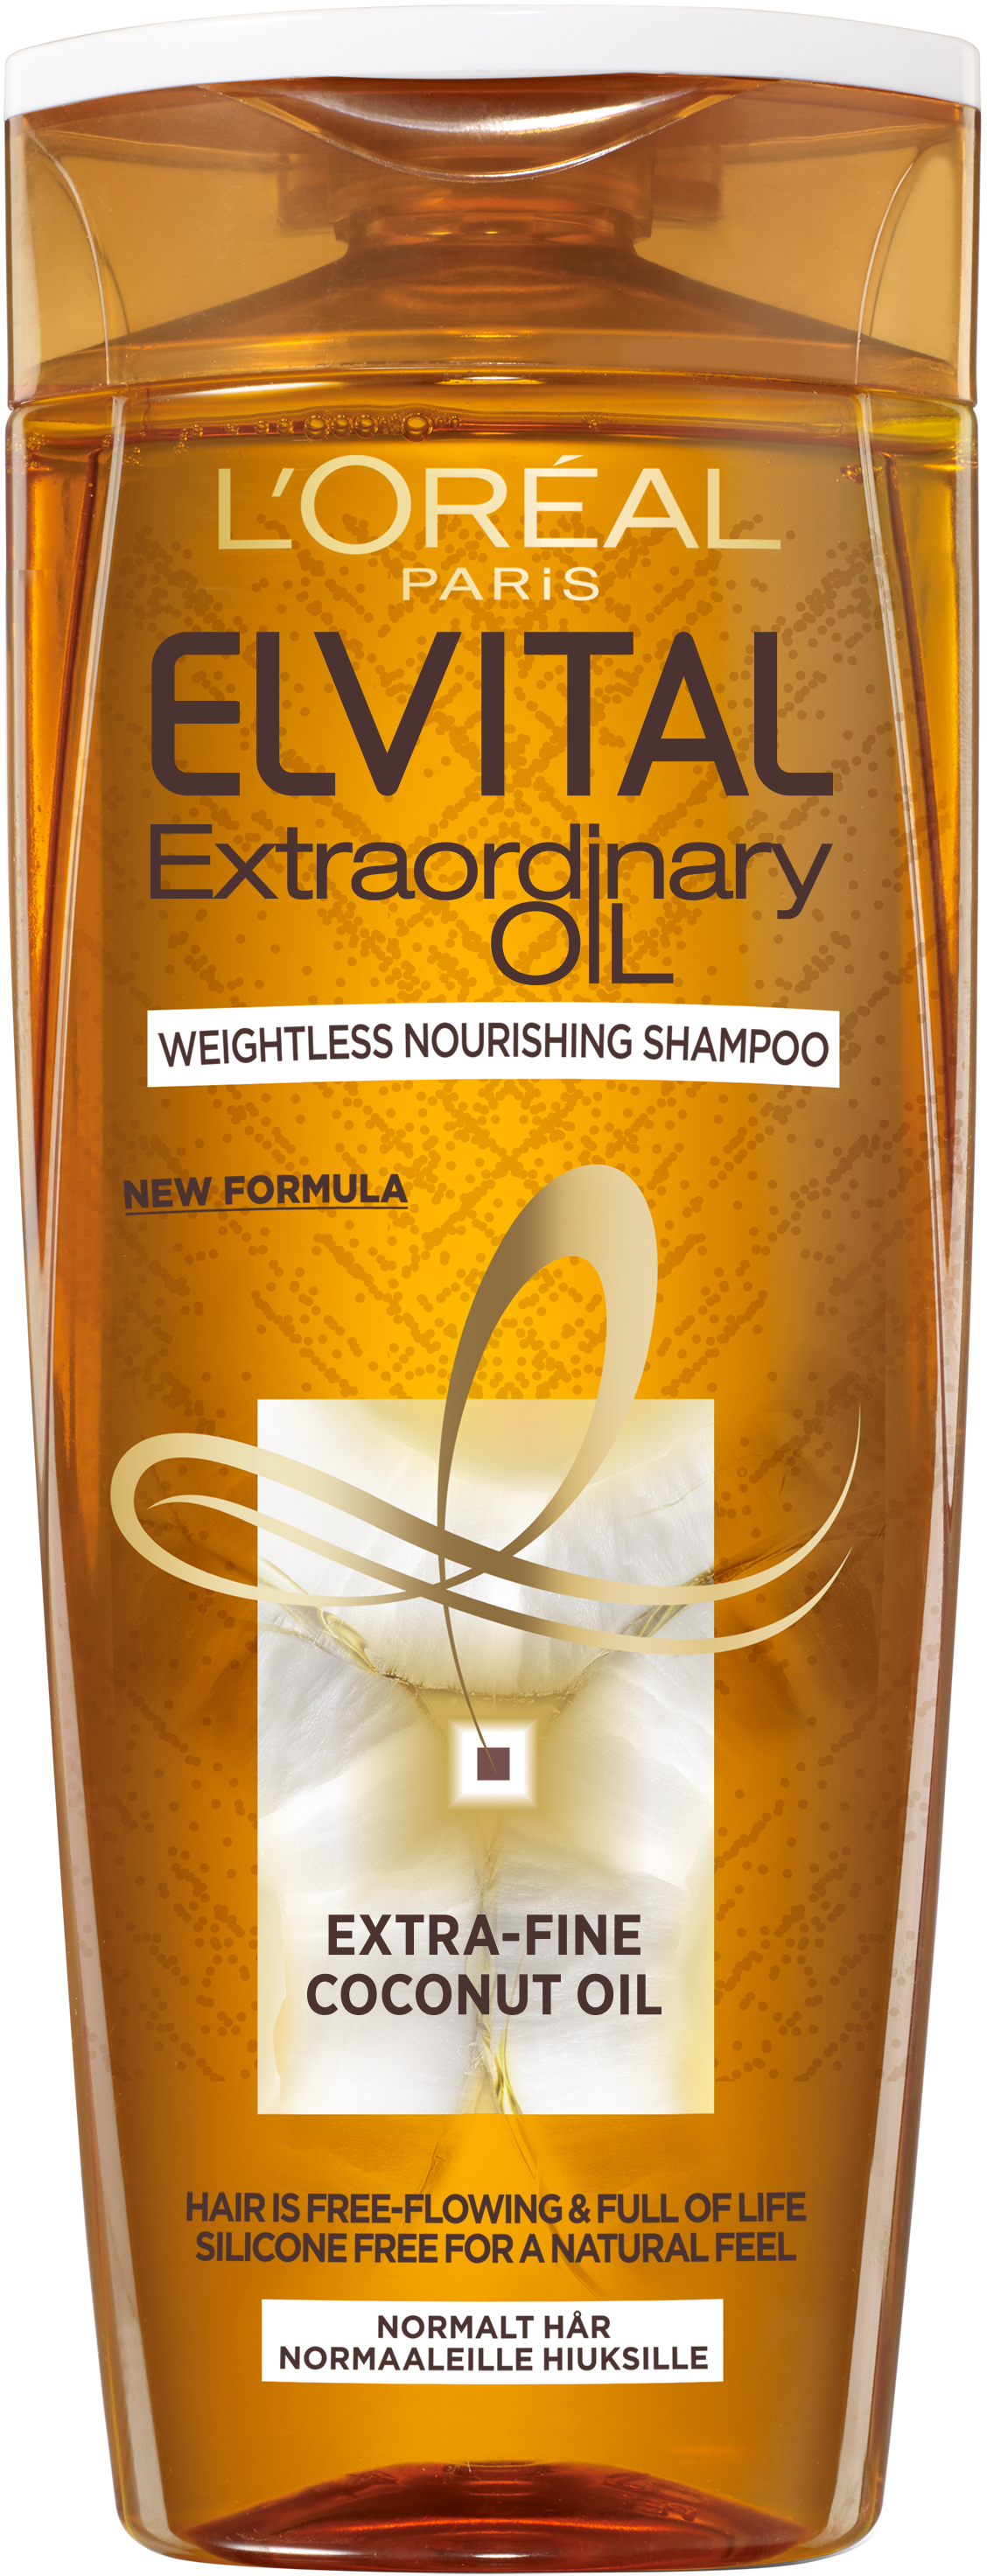 Elvital Extraordinary Coconut Oil Shampoo 250 - Paris -